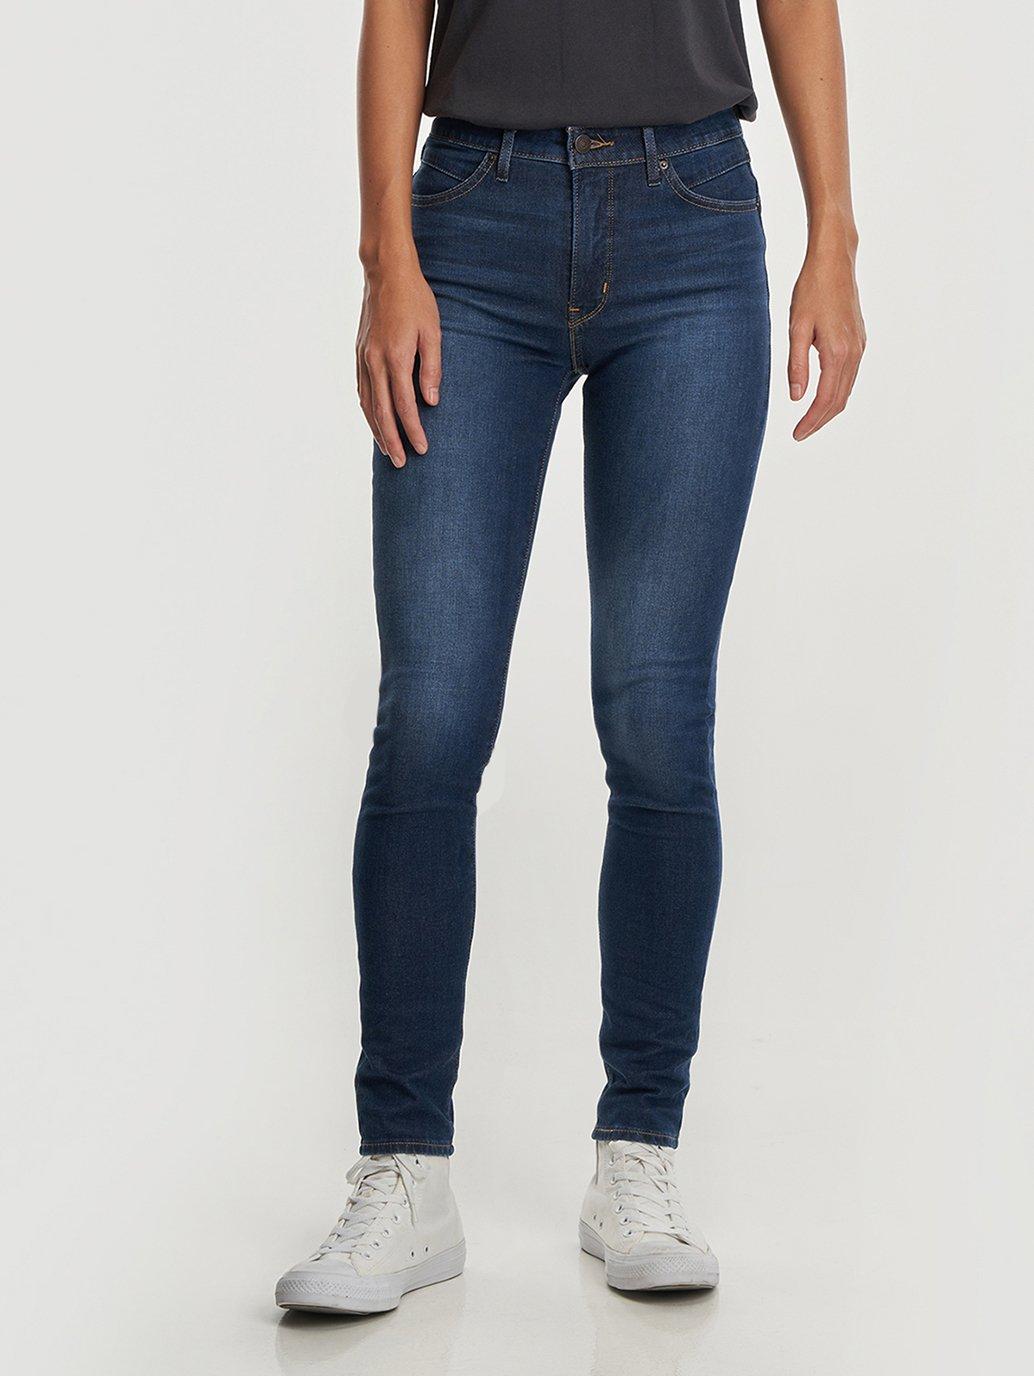 Buy Levi's® Women's Revel Shaping High-Rise Skinny Jeans | Levi’s ...